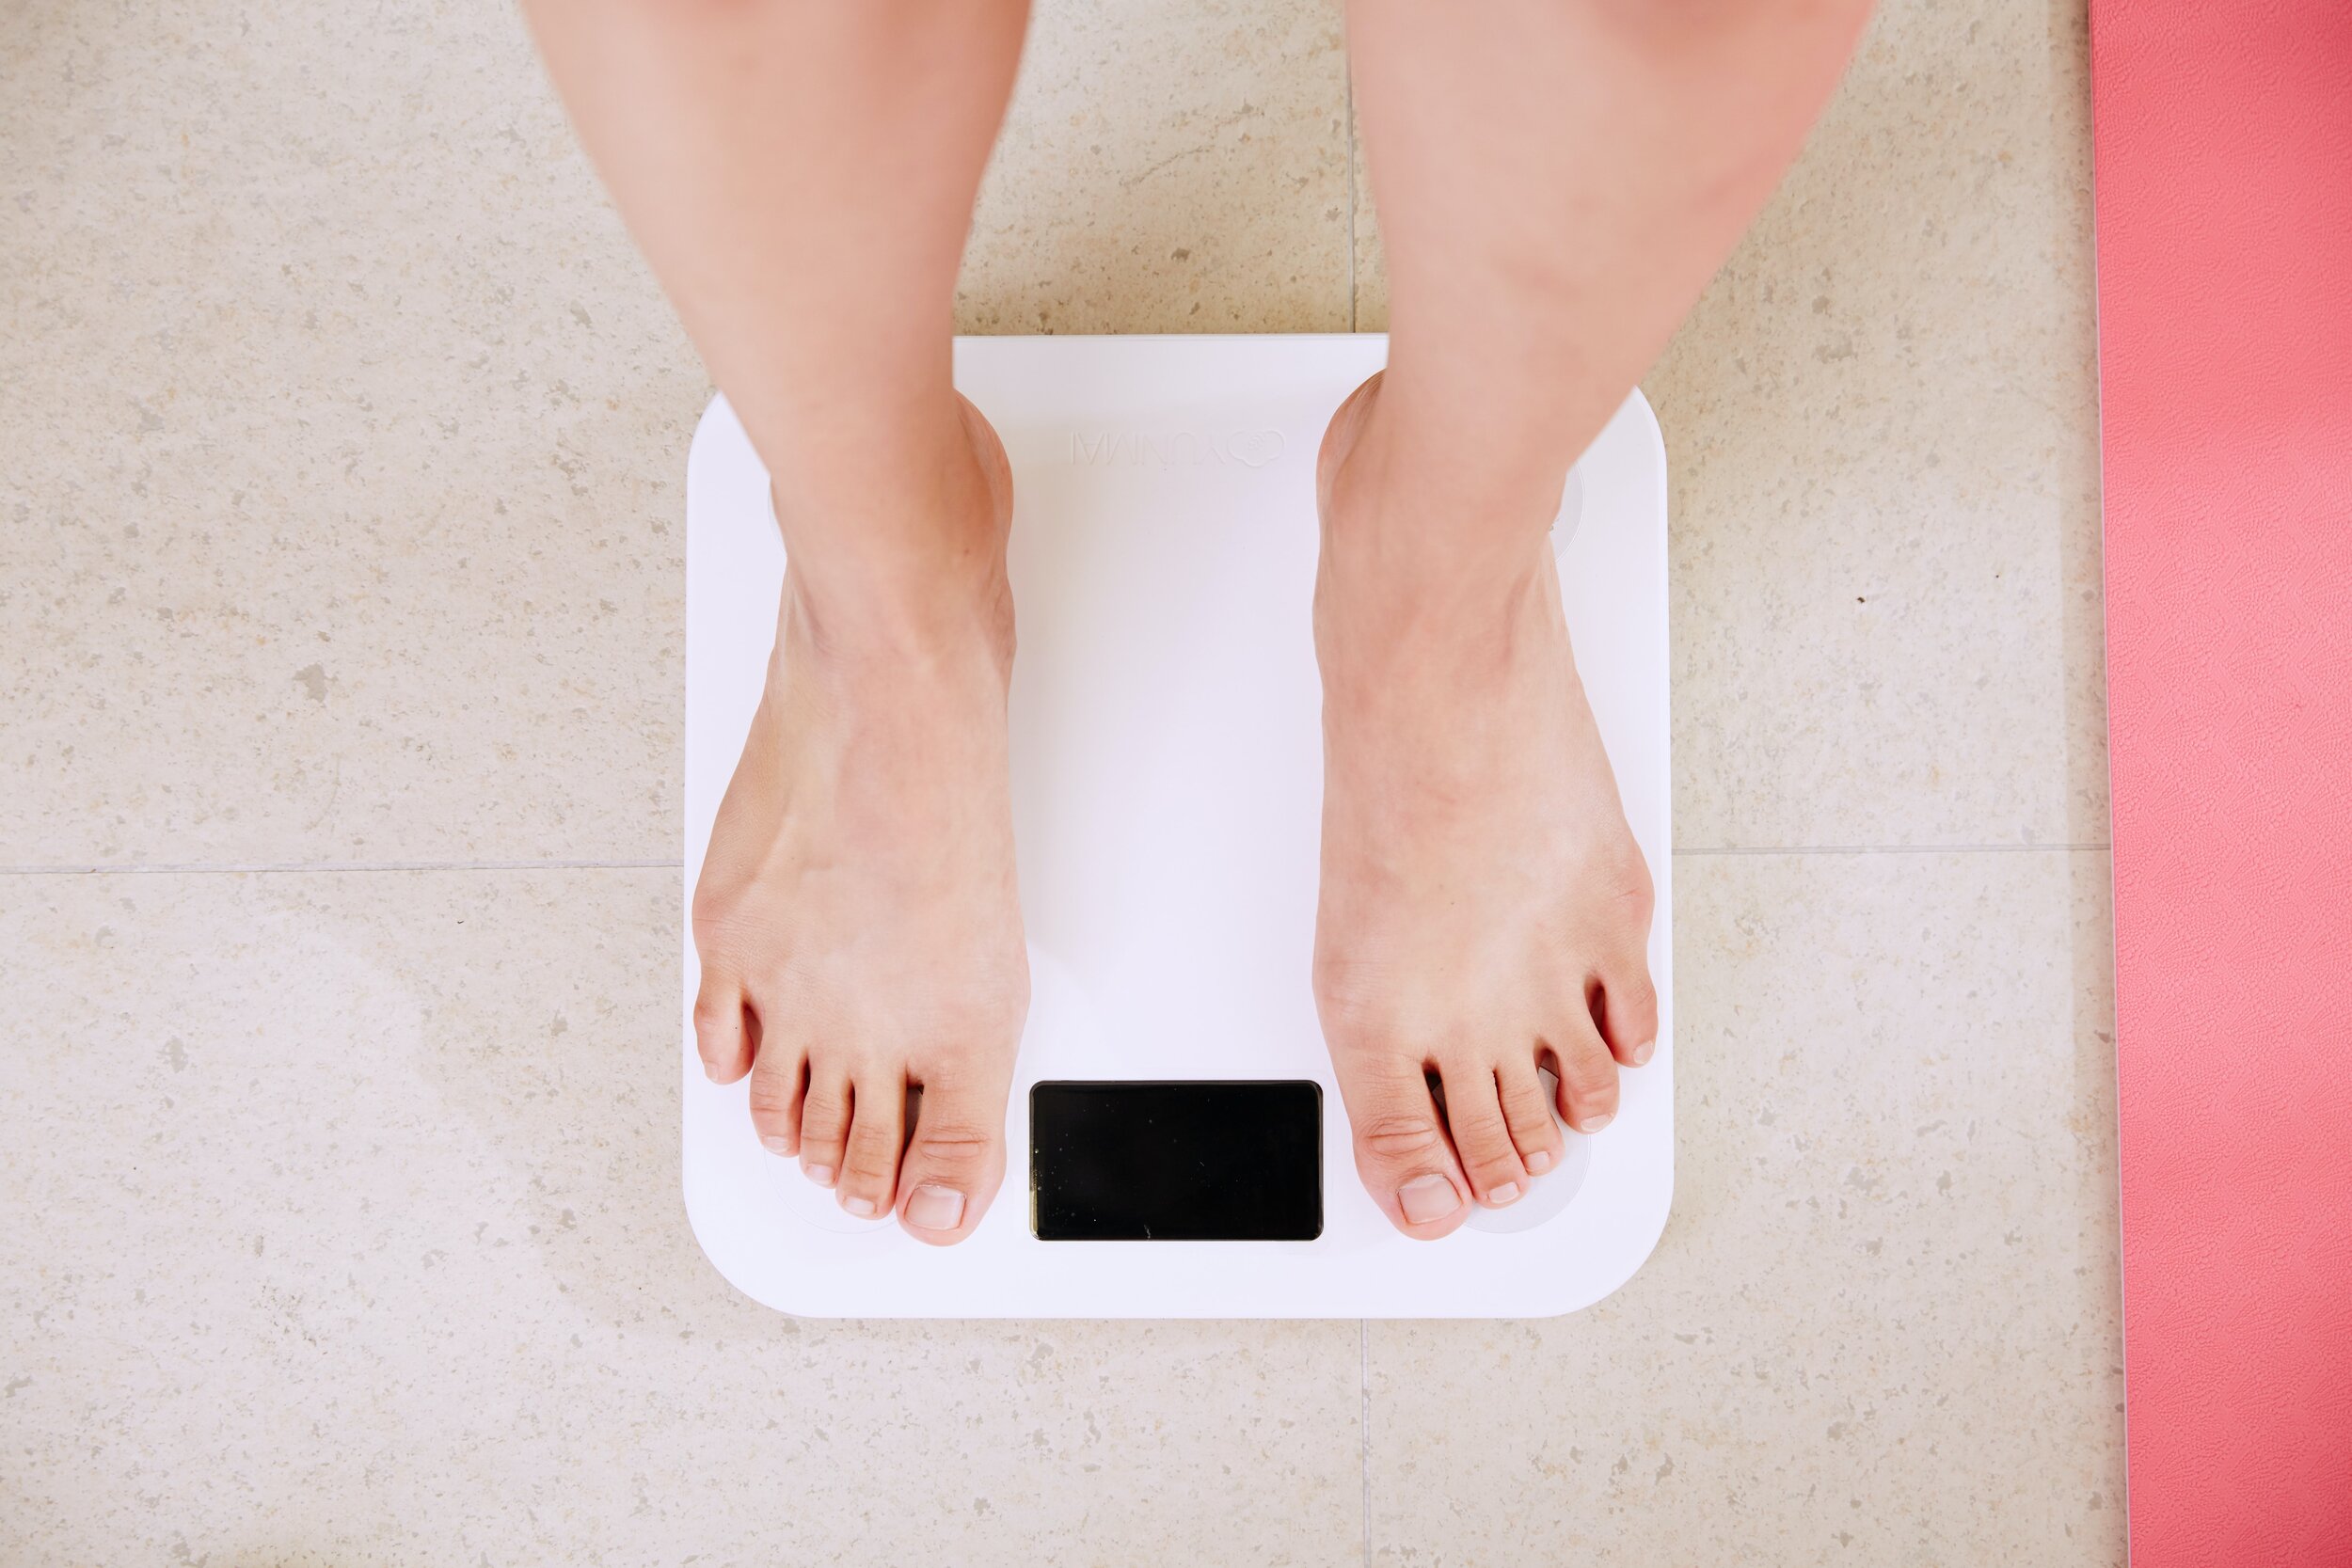 Body Image/Eating Disorders